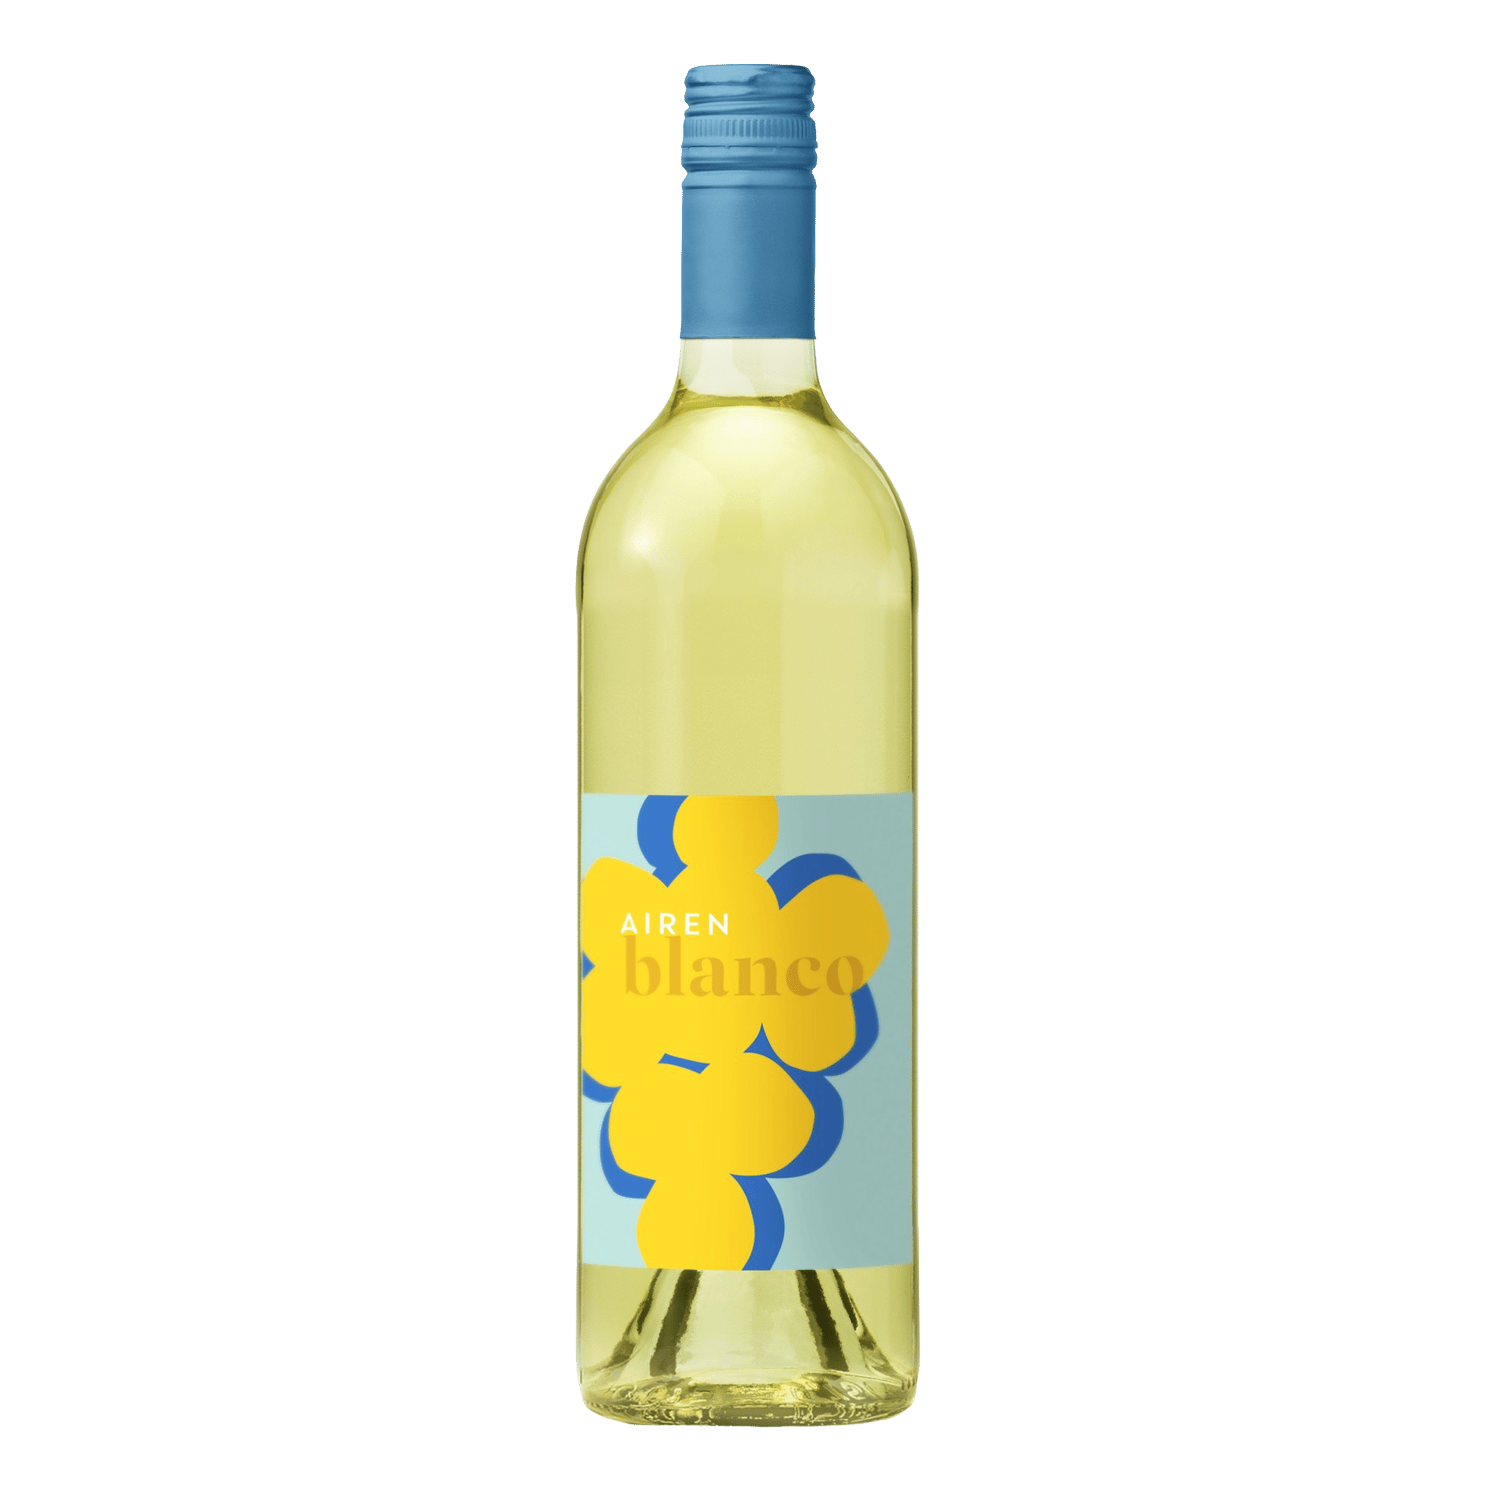 Spanien Airen dry white wine, Organic, 0.75l